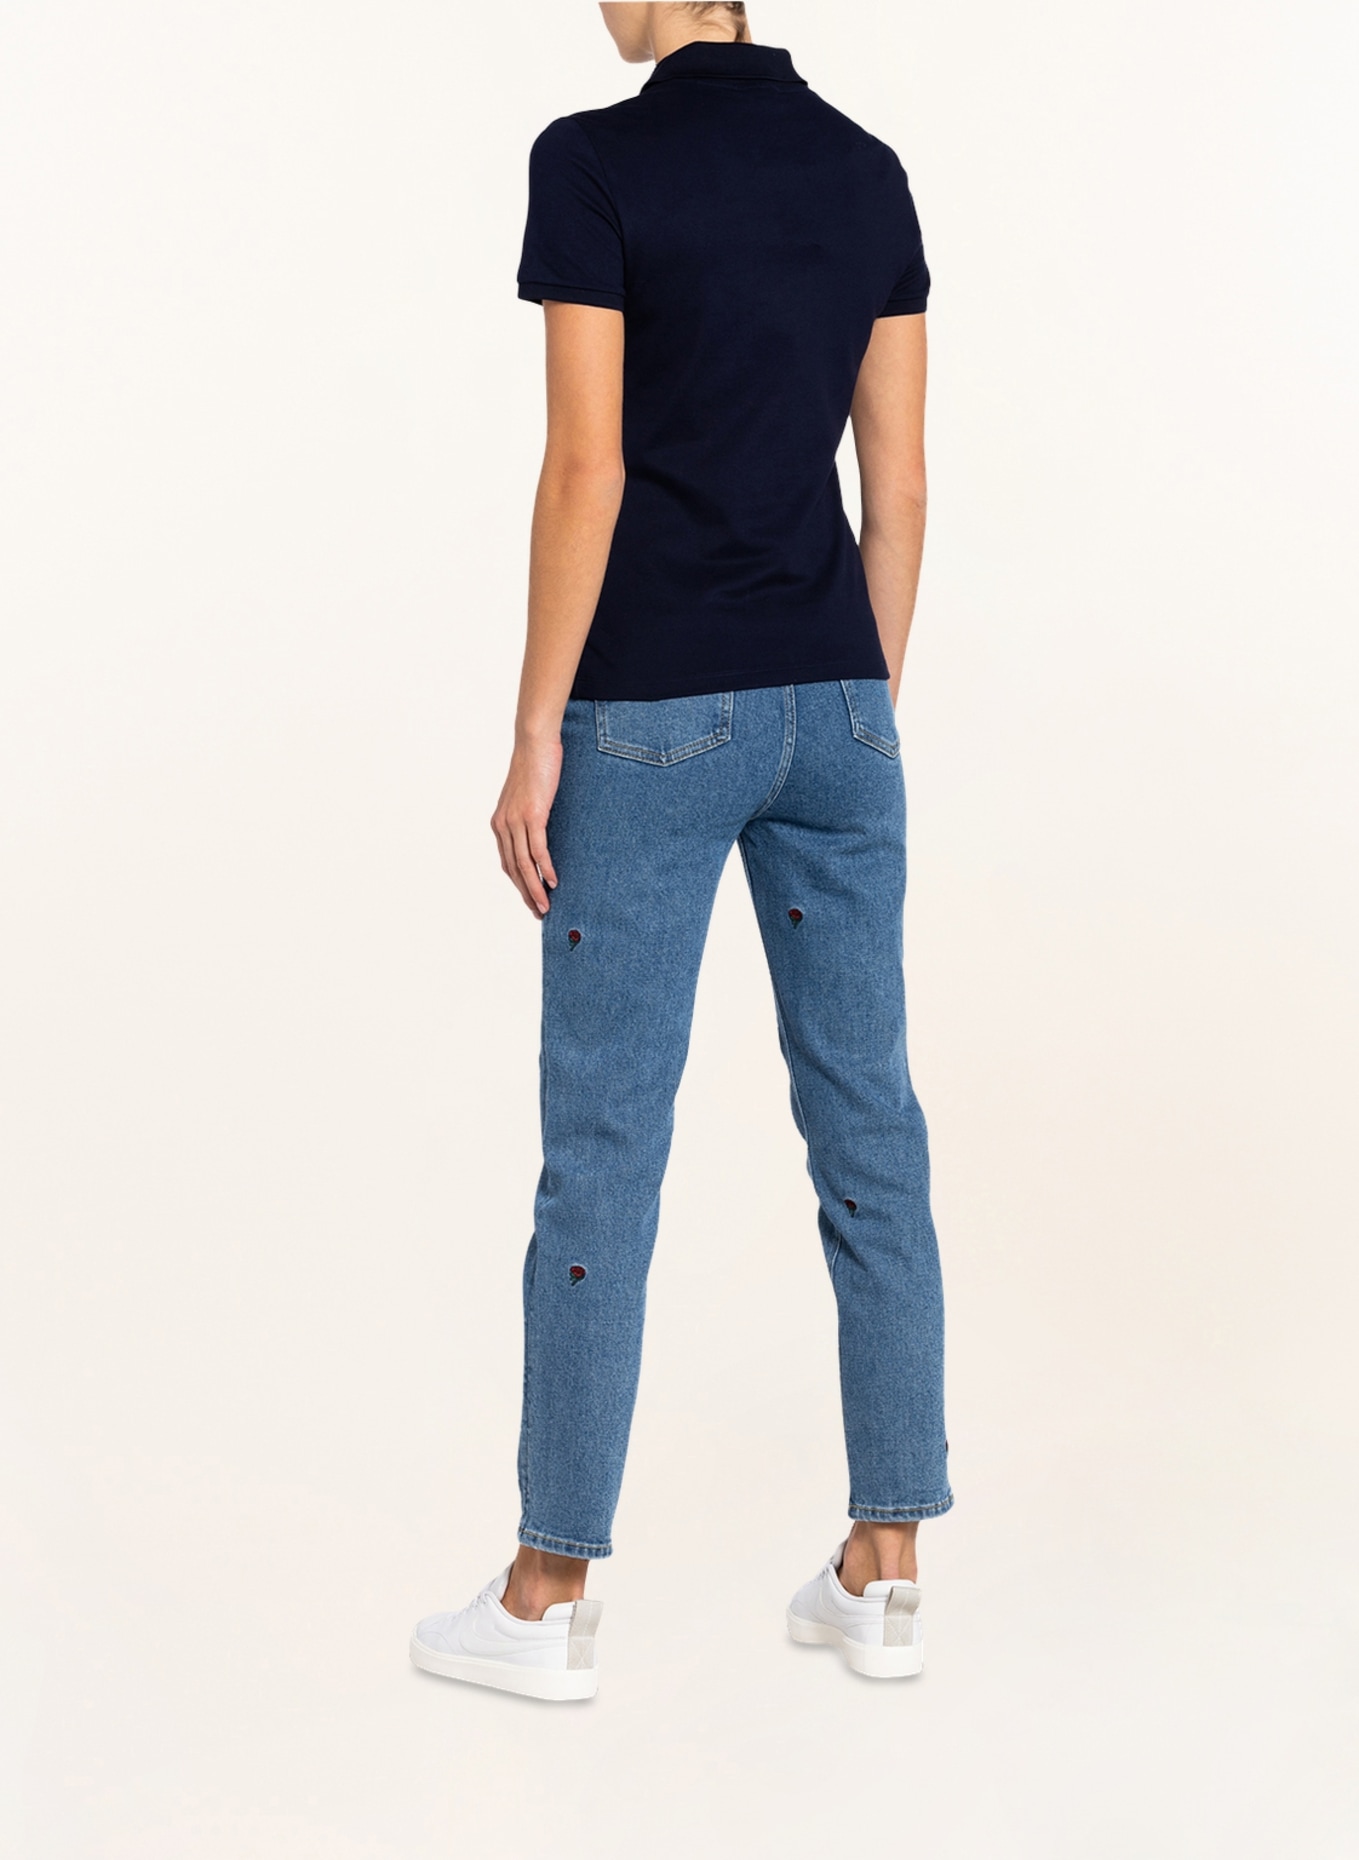 LACOSTE Piqué-Poloshirt Slim Fit, Farbe: NAVY (Bild 3)